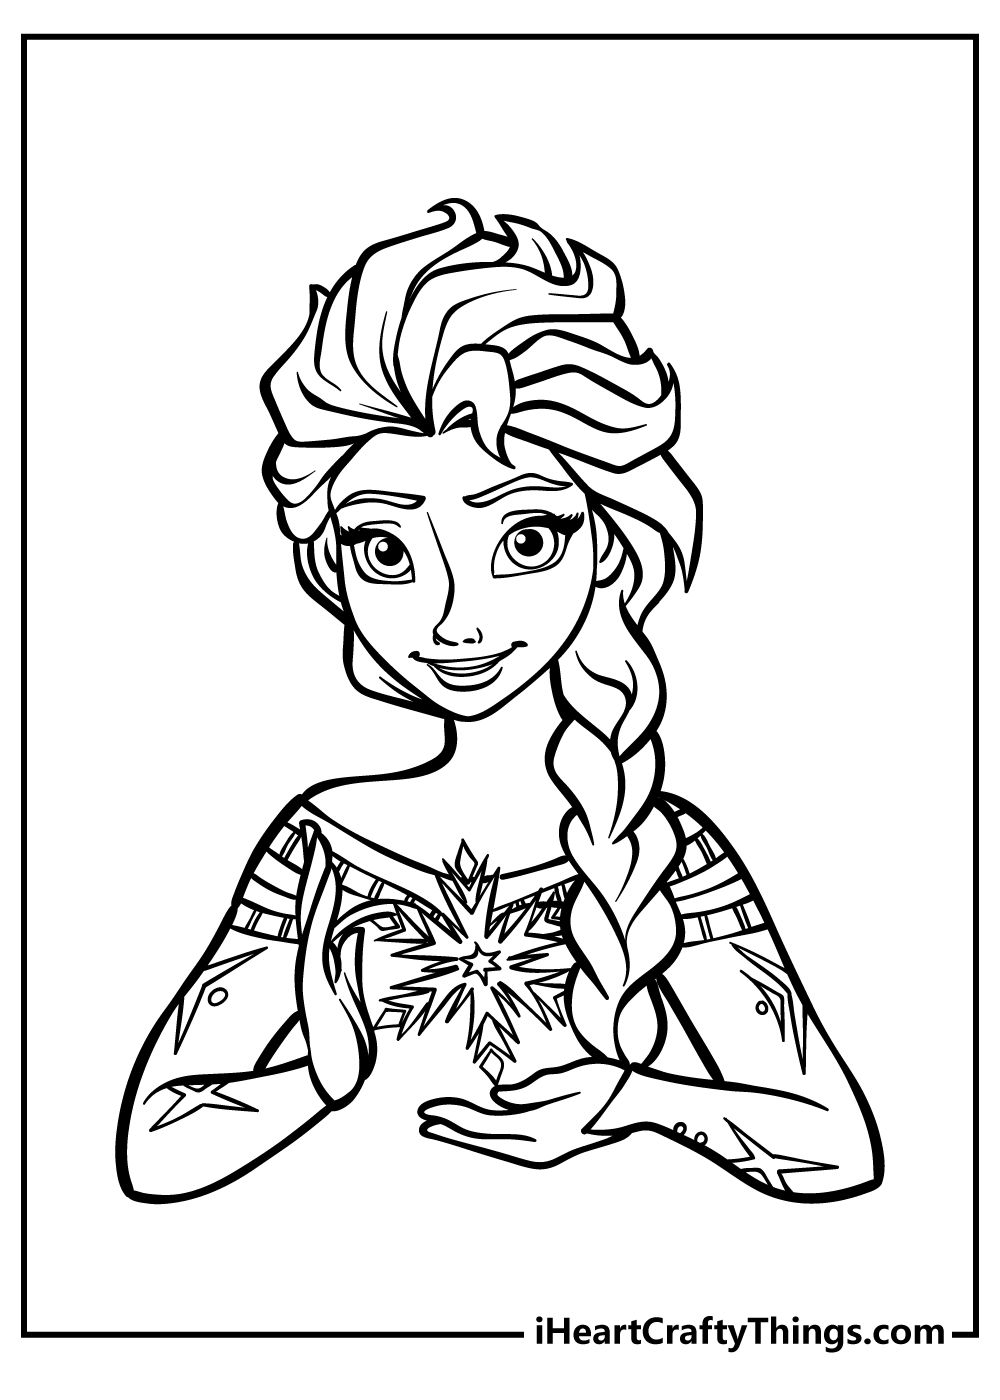 Elsa Coloring Original Sheet for children free download